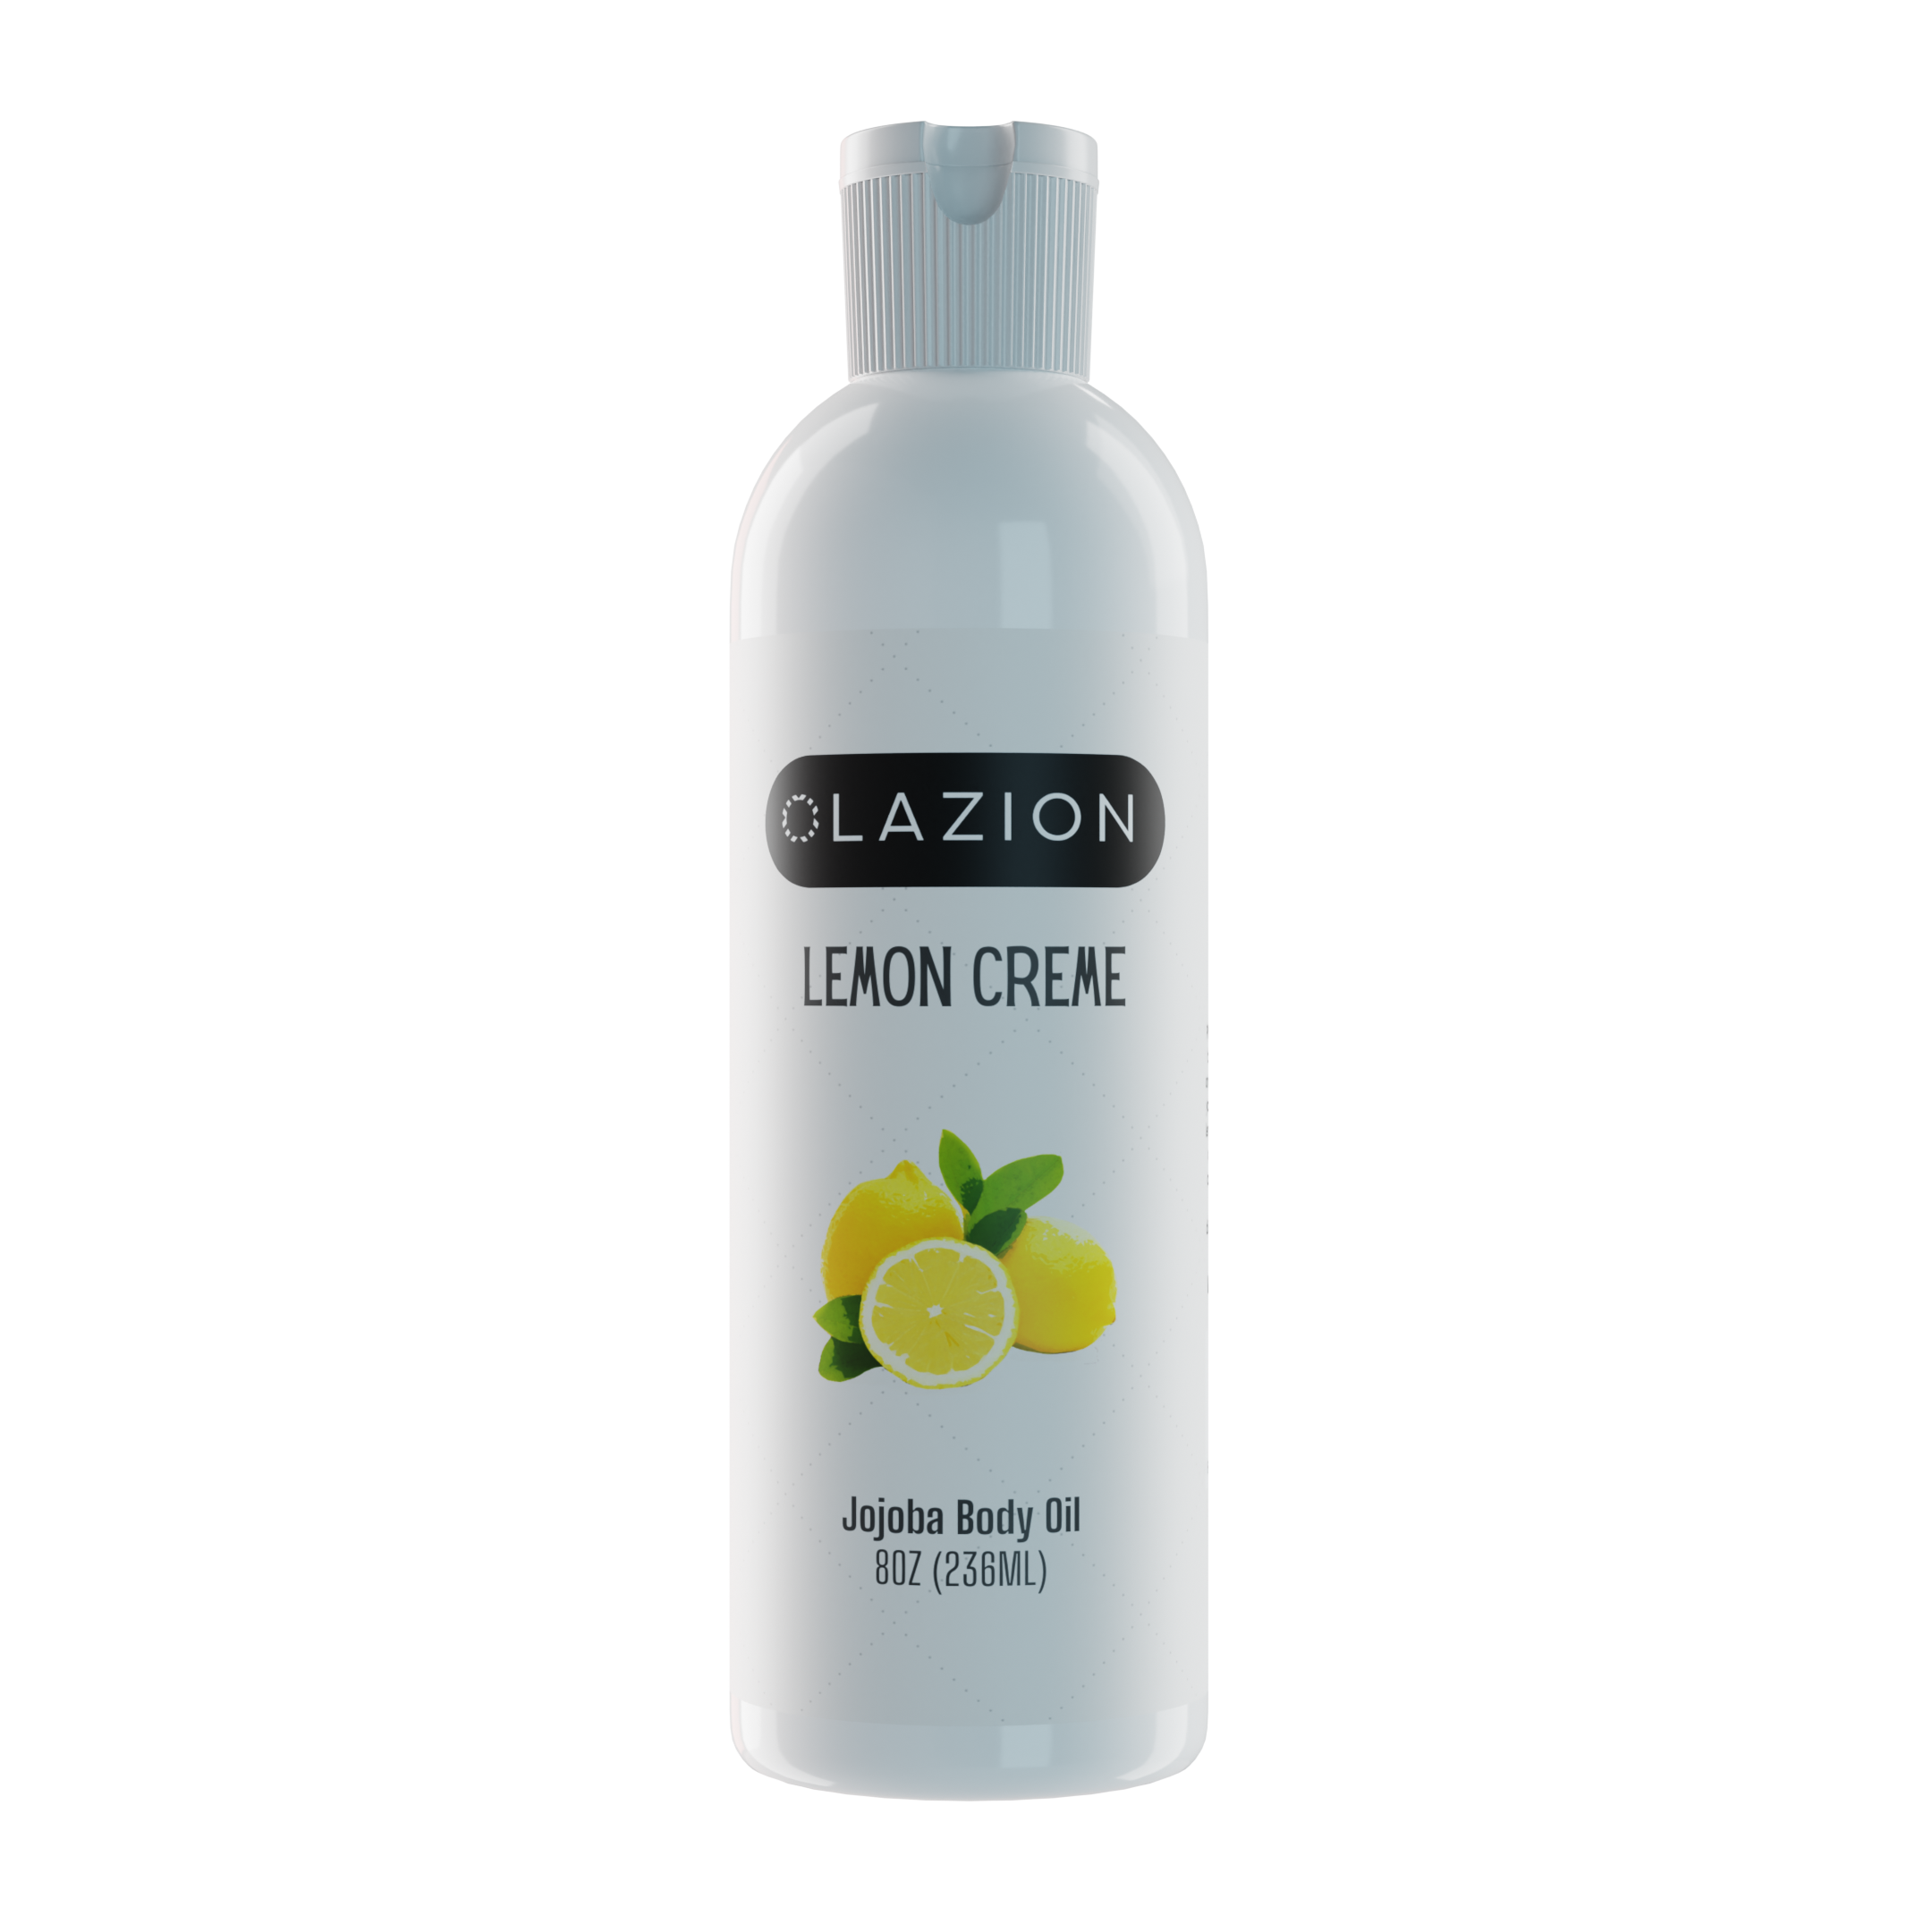 Lemon Creme All Natural Body Oil